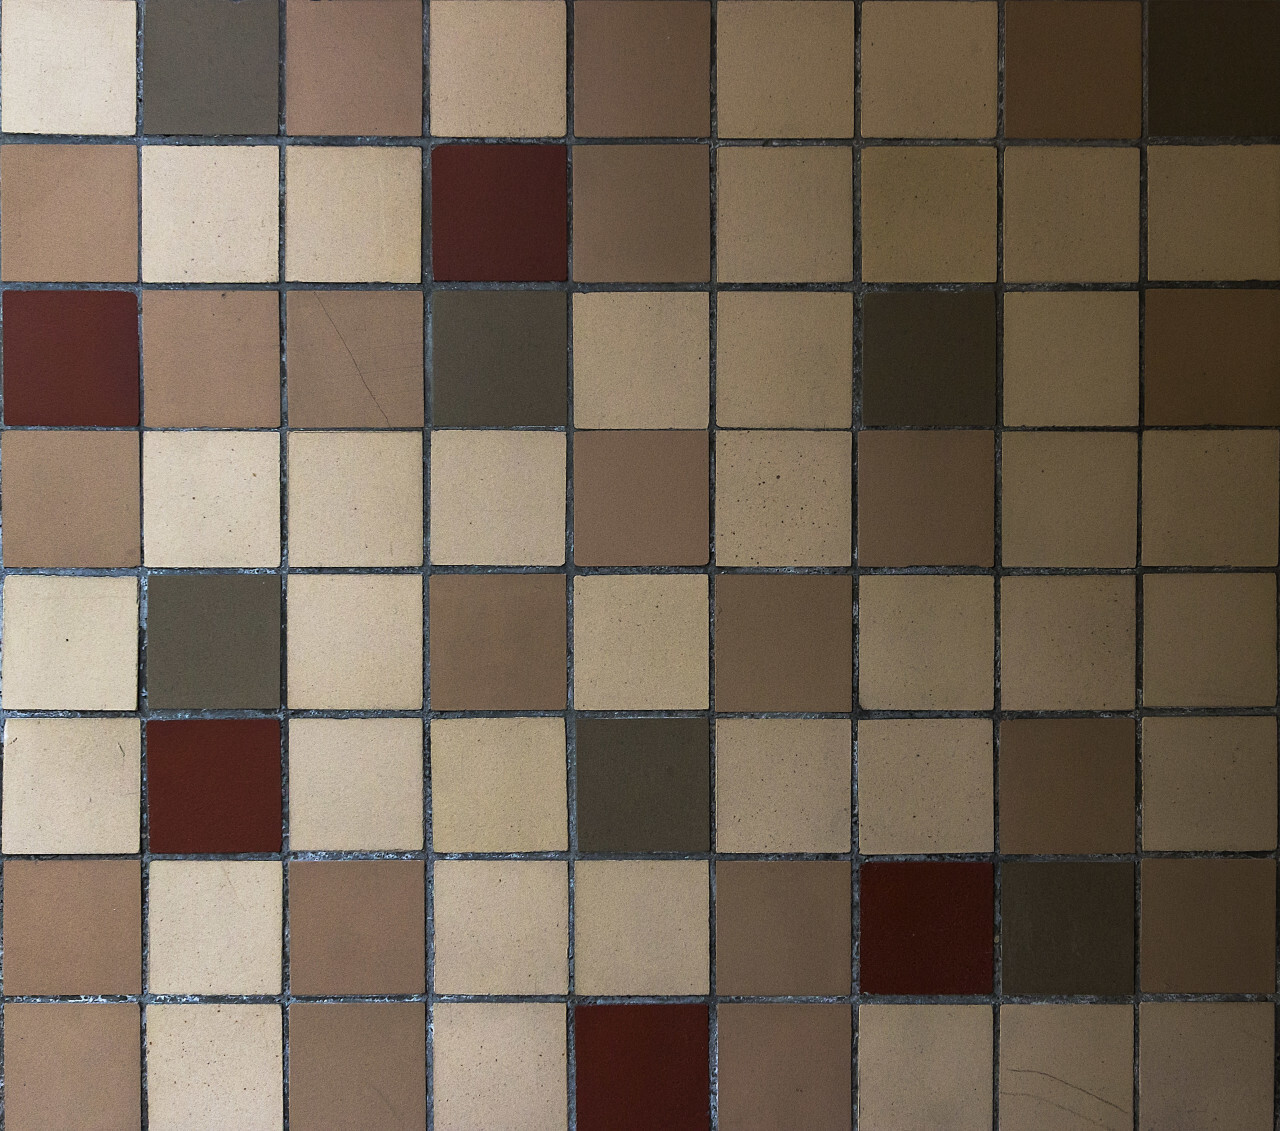 Slate tile ceramic seamless texture